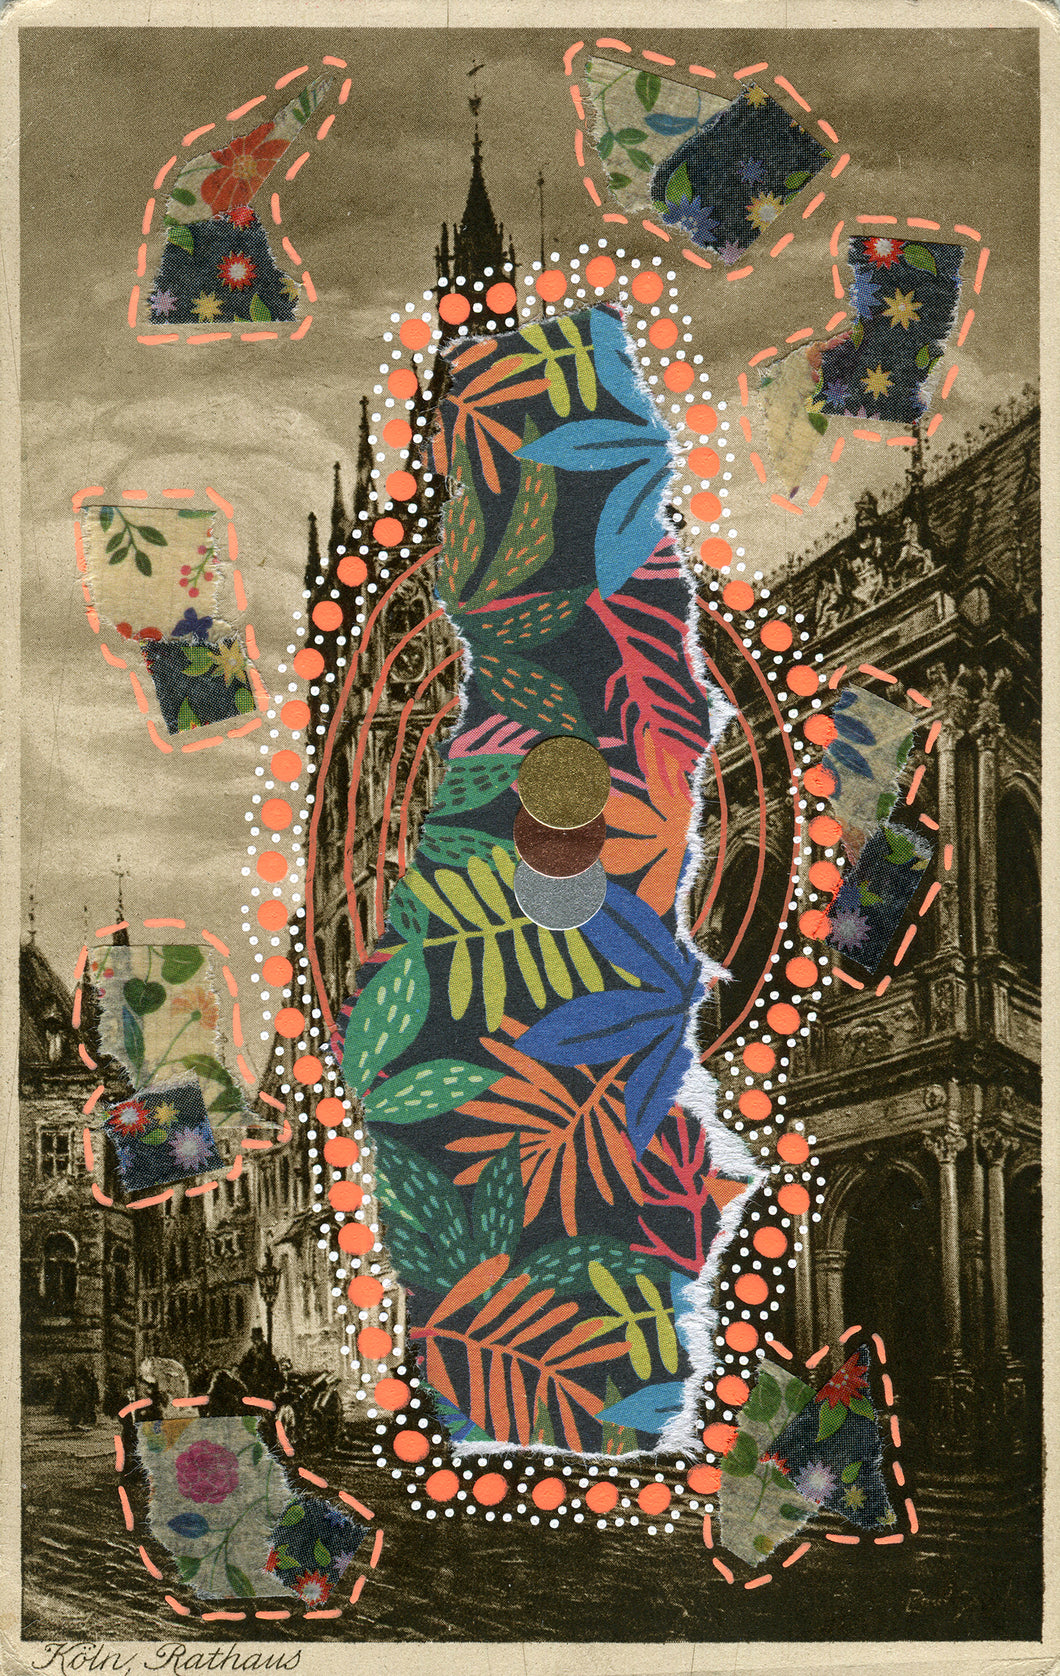 Vintage Cologne Postcard Art Collage In Gothic Style - Naomi Vona Art